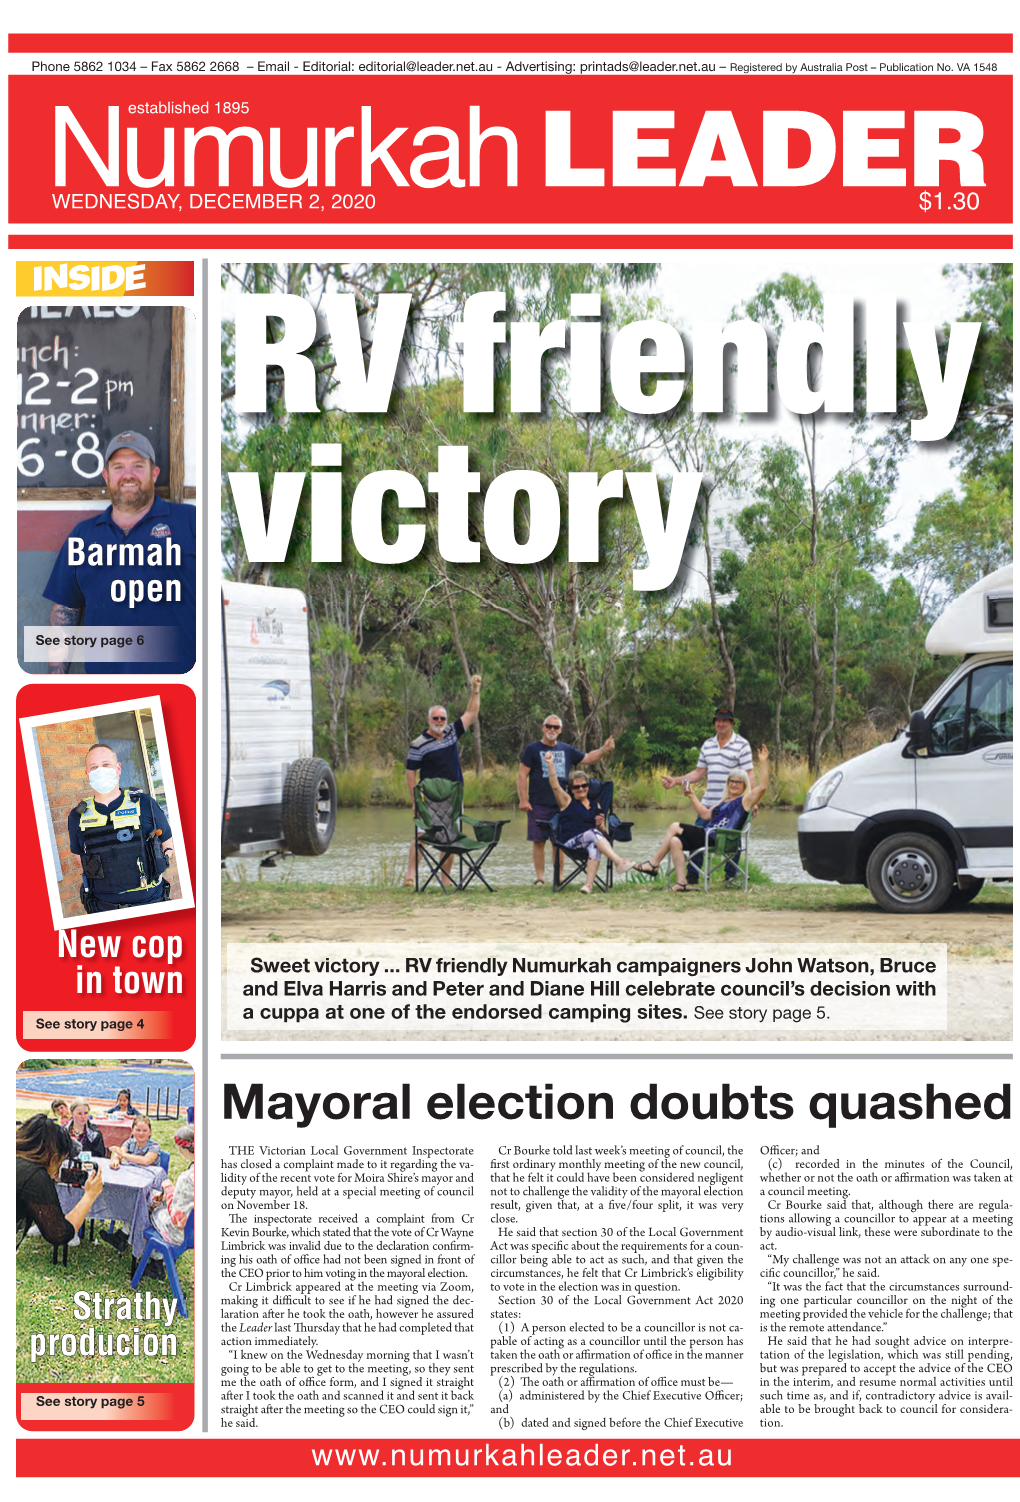 Mayoral Election Doubts Quashed